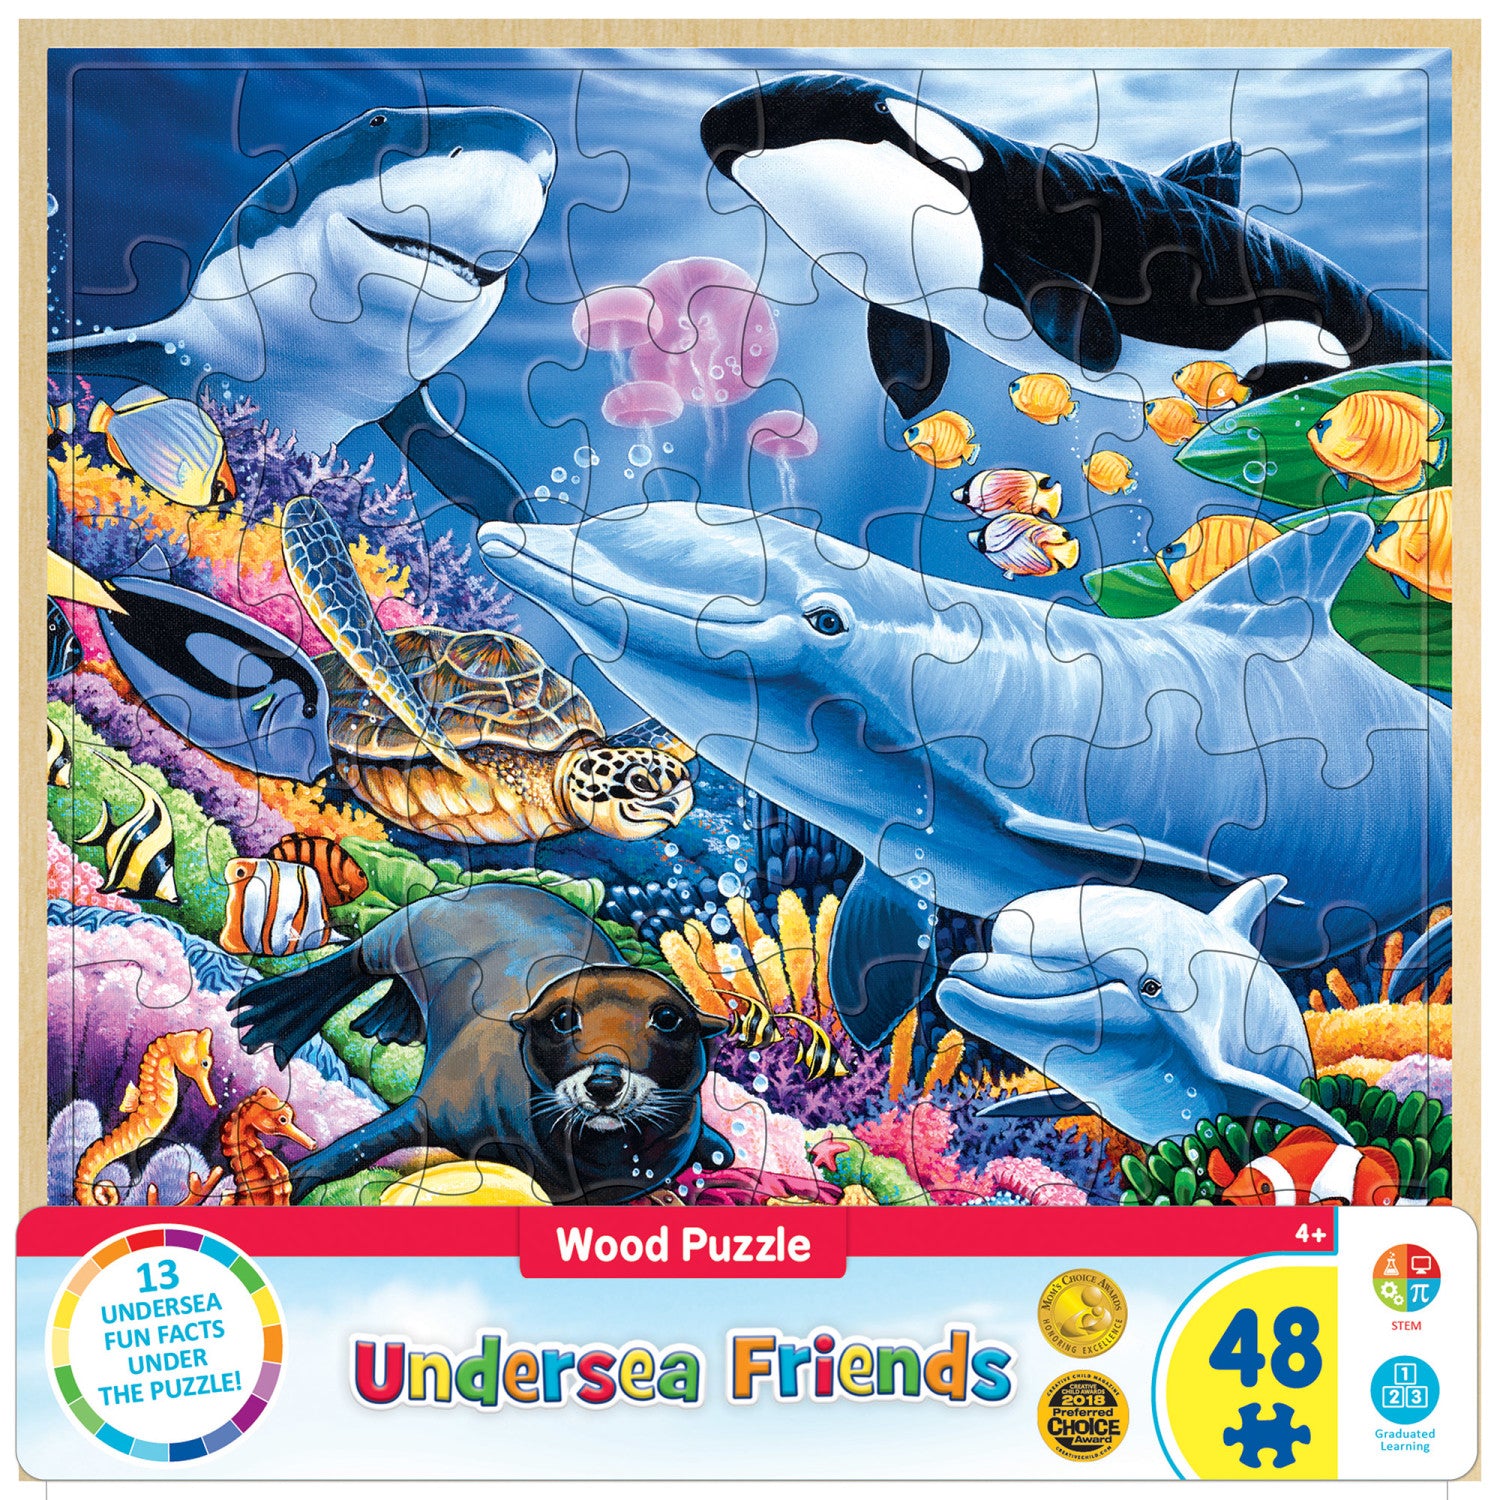 Wood Fun Facts - Undersea Friends 48 Piece Wood Puzzle